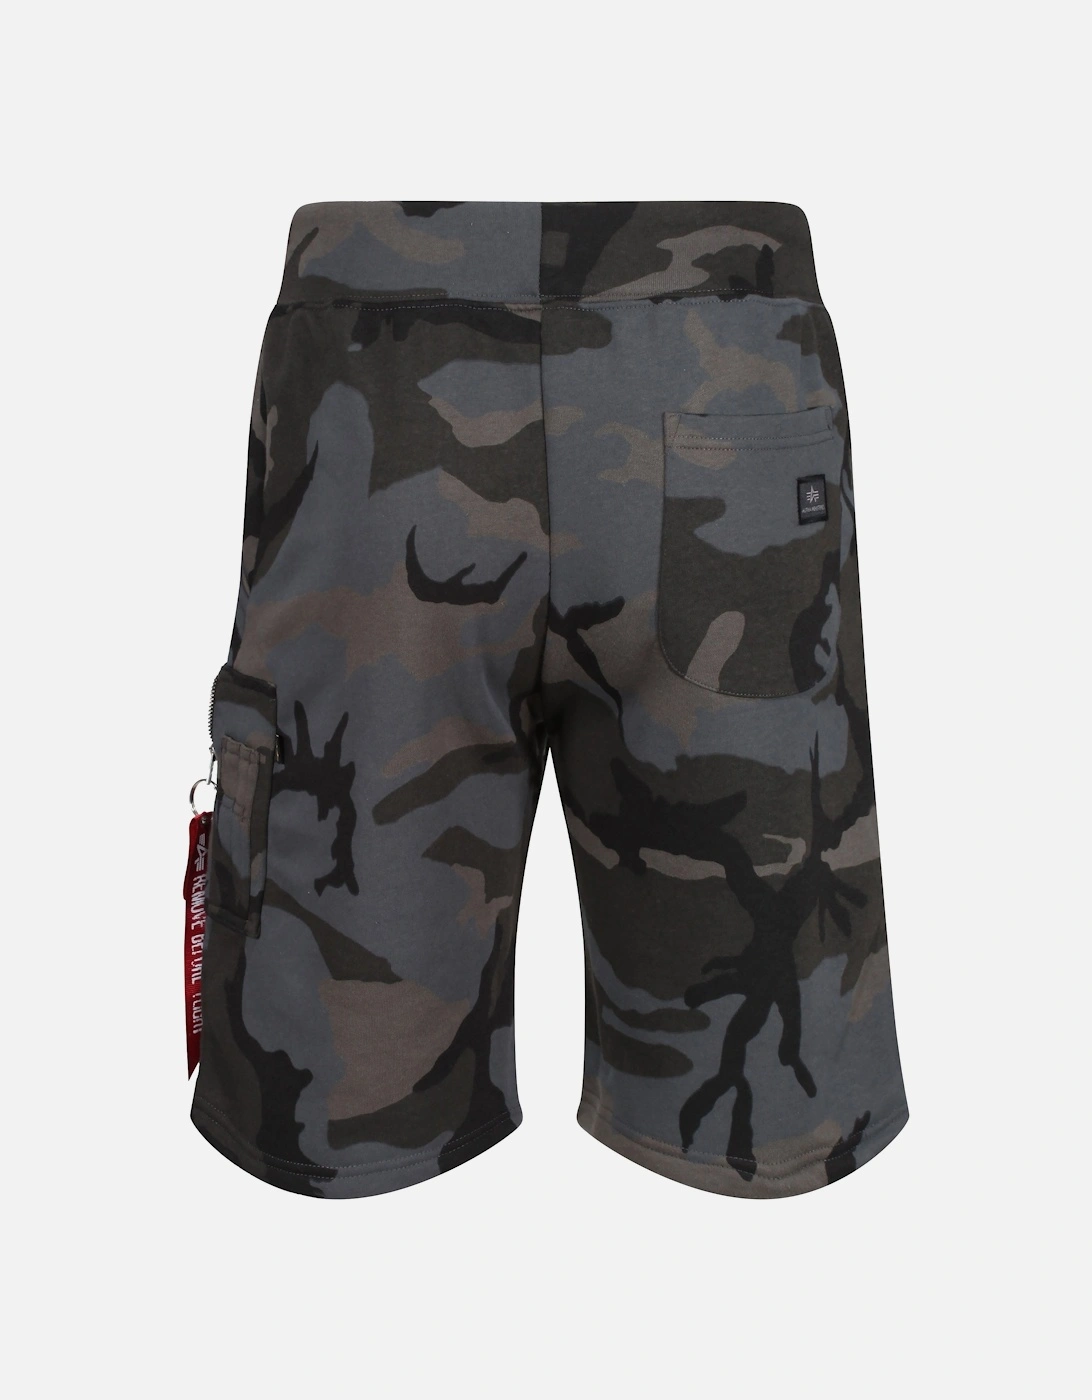 X-Fit Cargo Camo Shorts | Black Camo